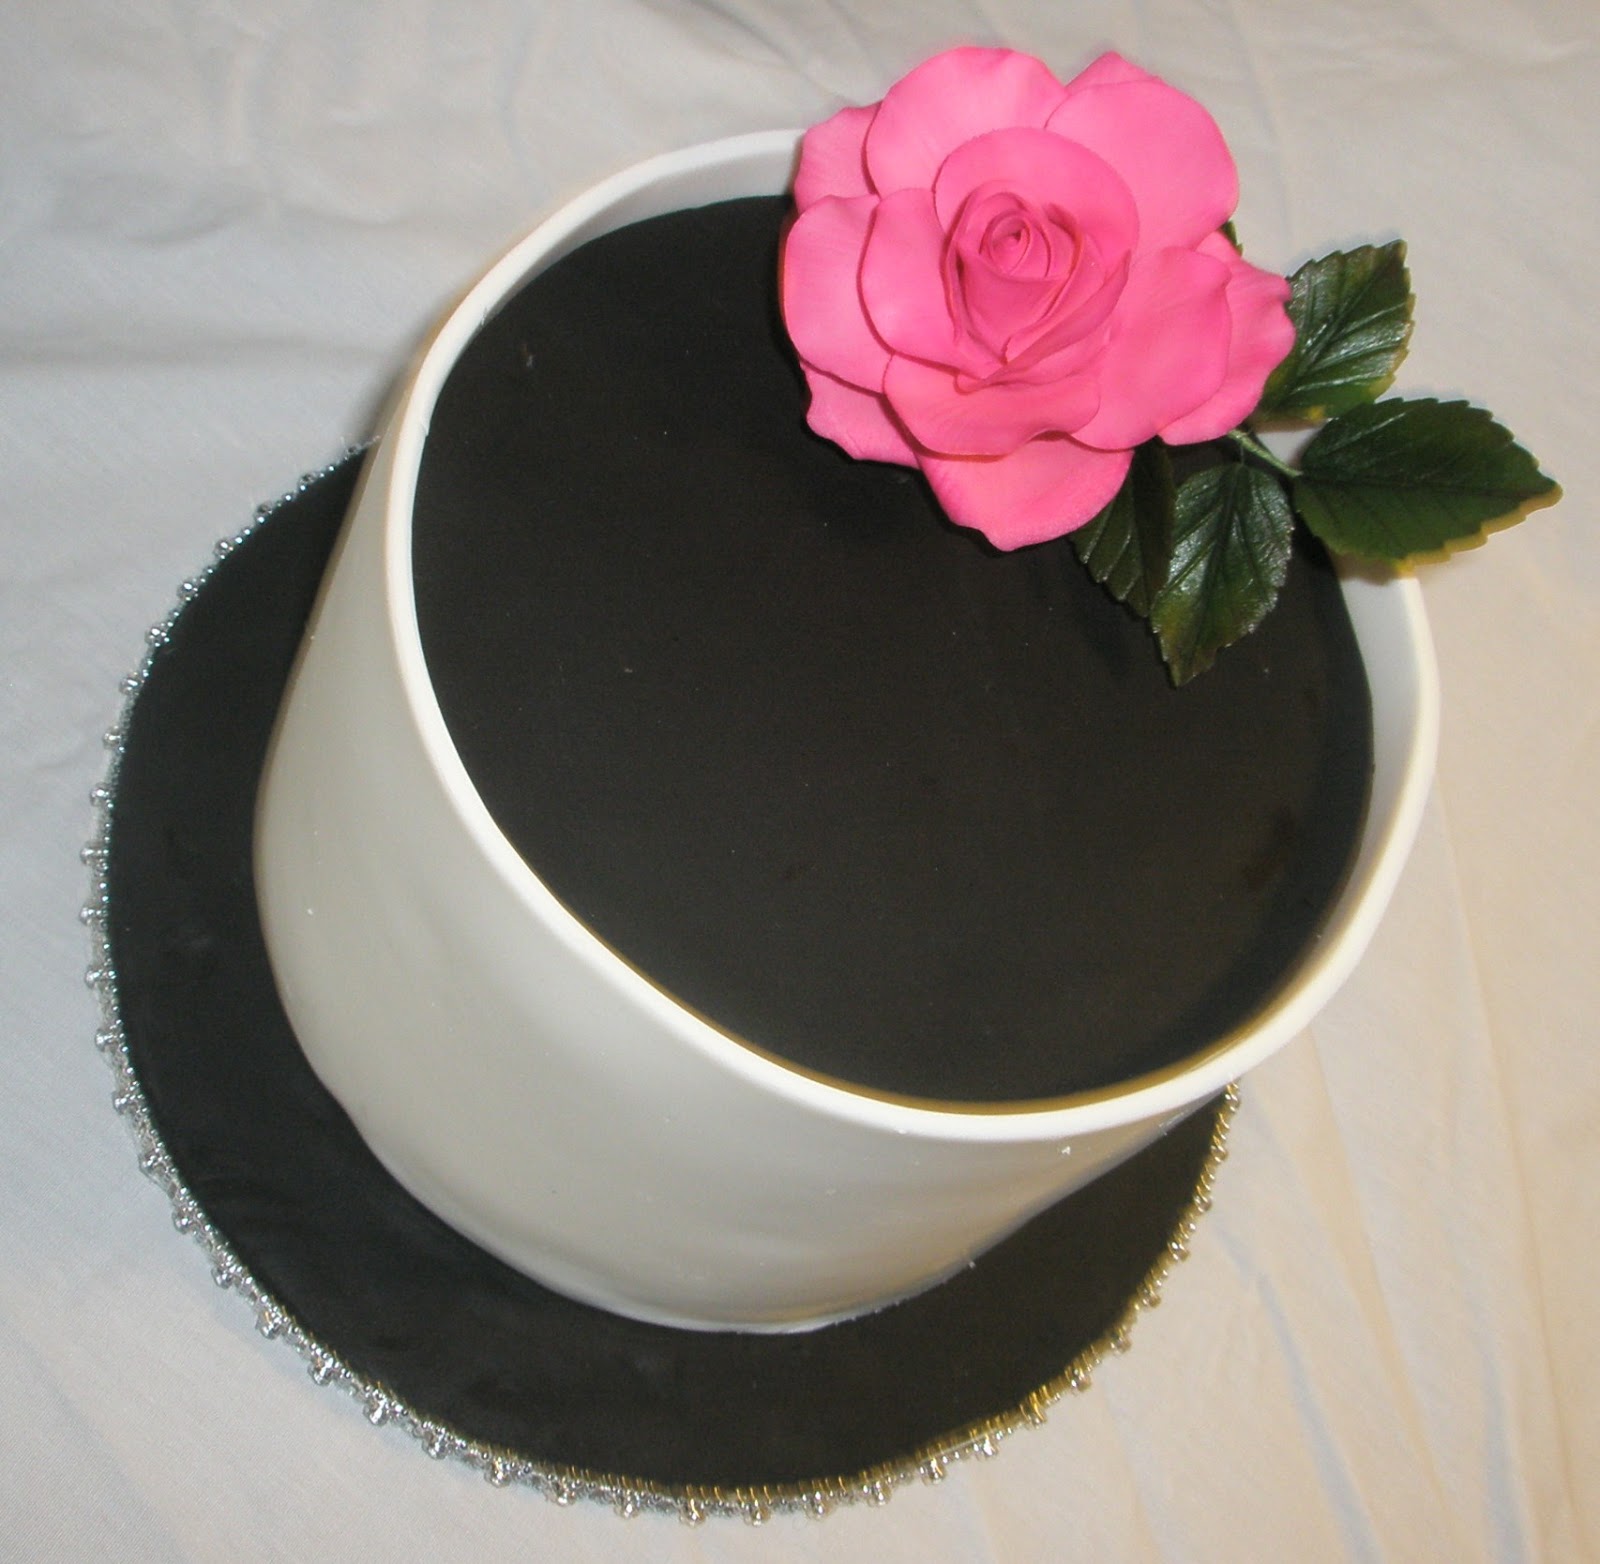 Cake Boss Black and White Wedding Cakes